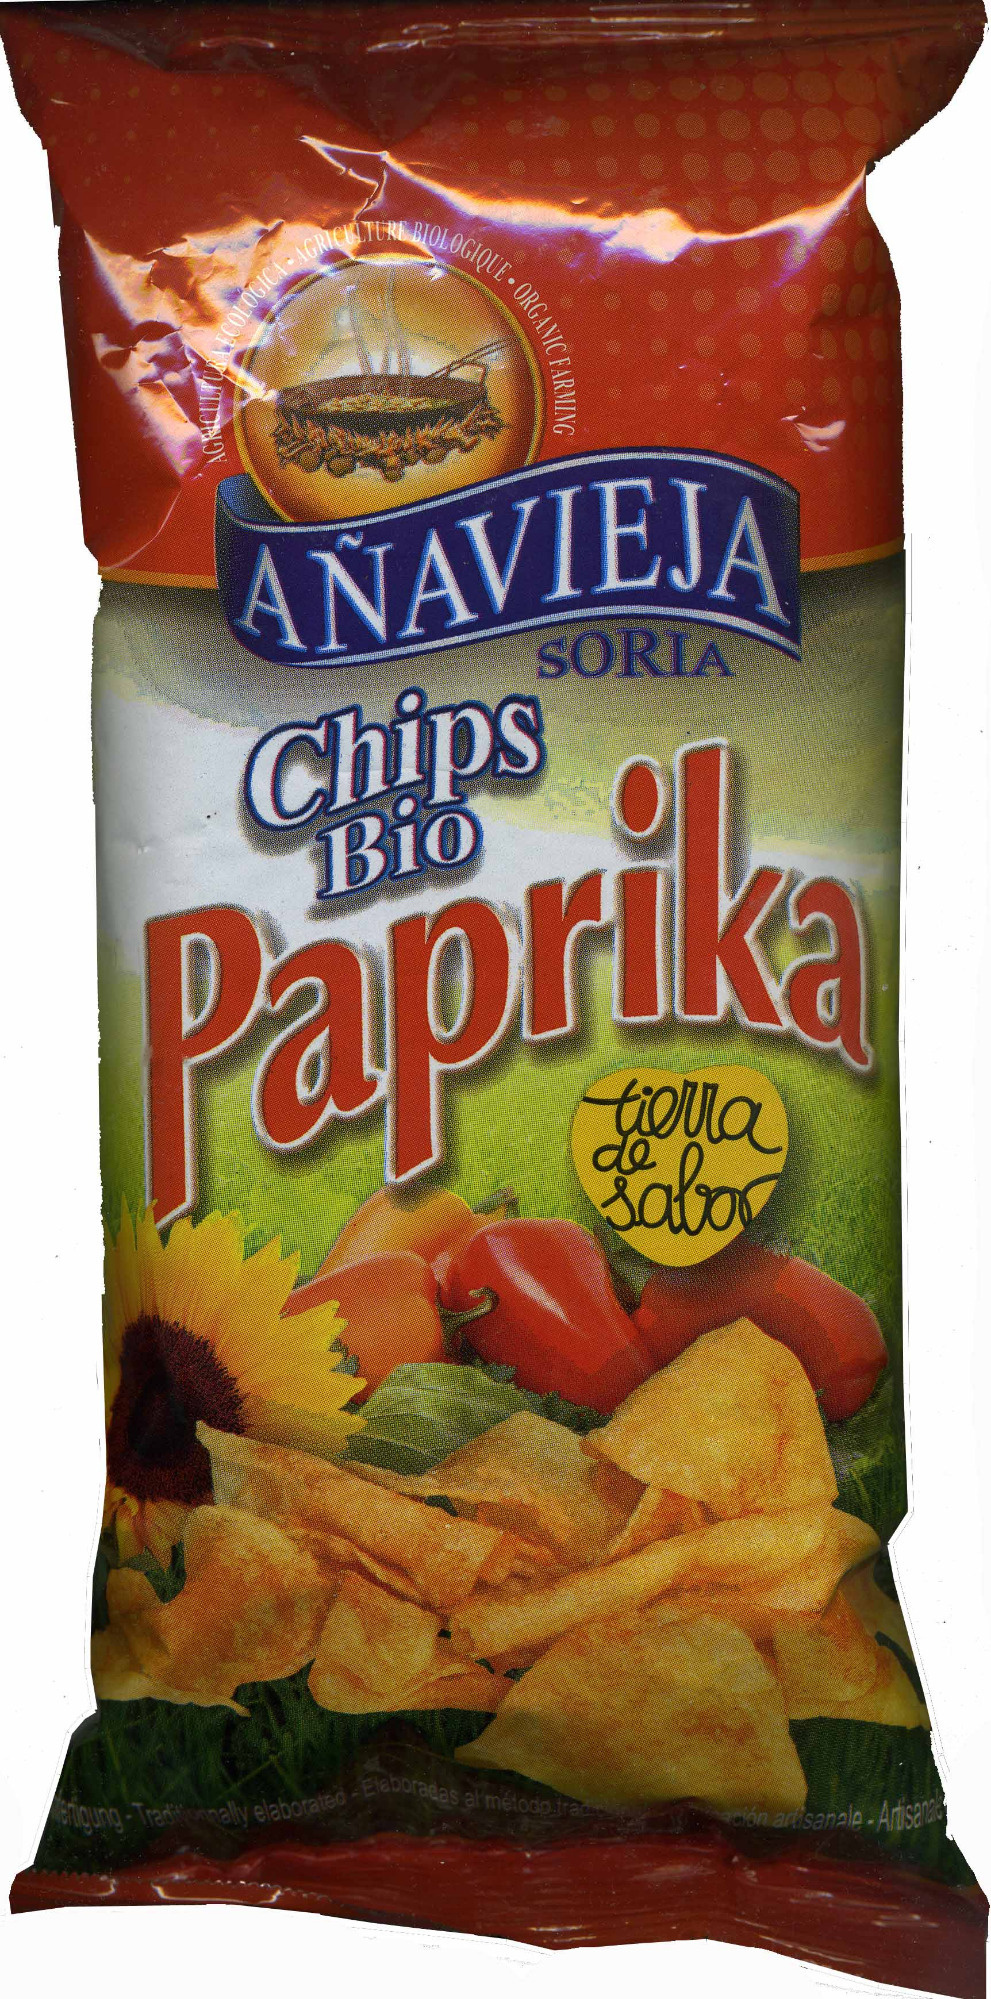 Chips bio paprika - Produktua - es